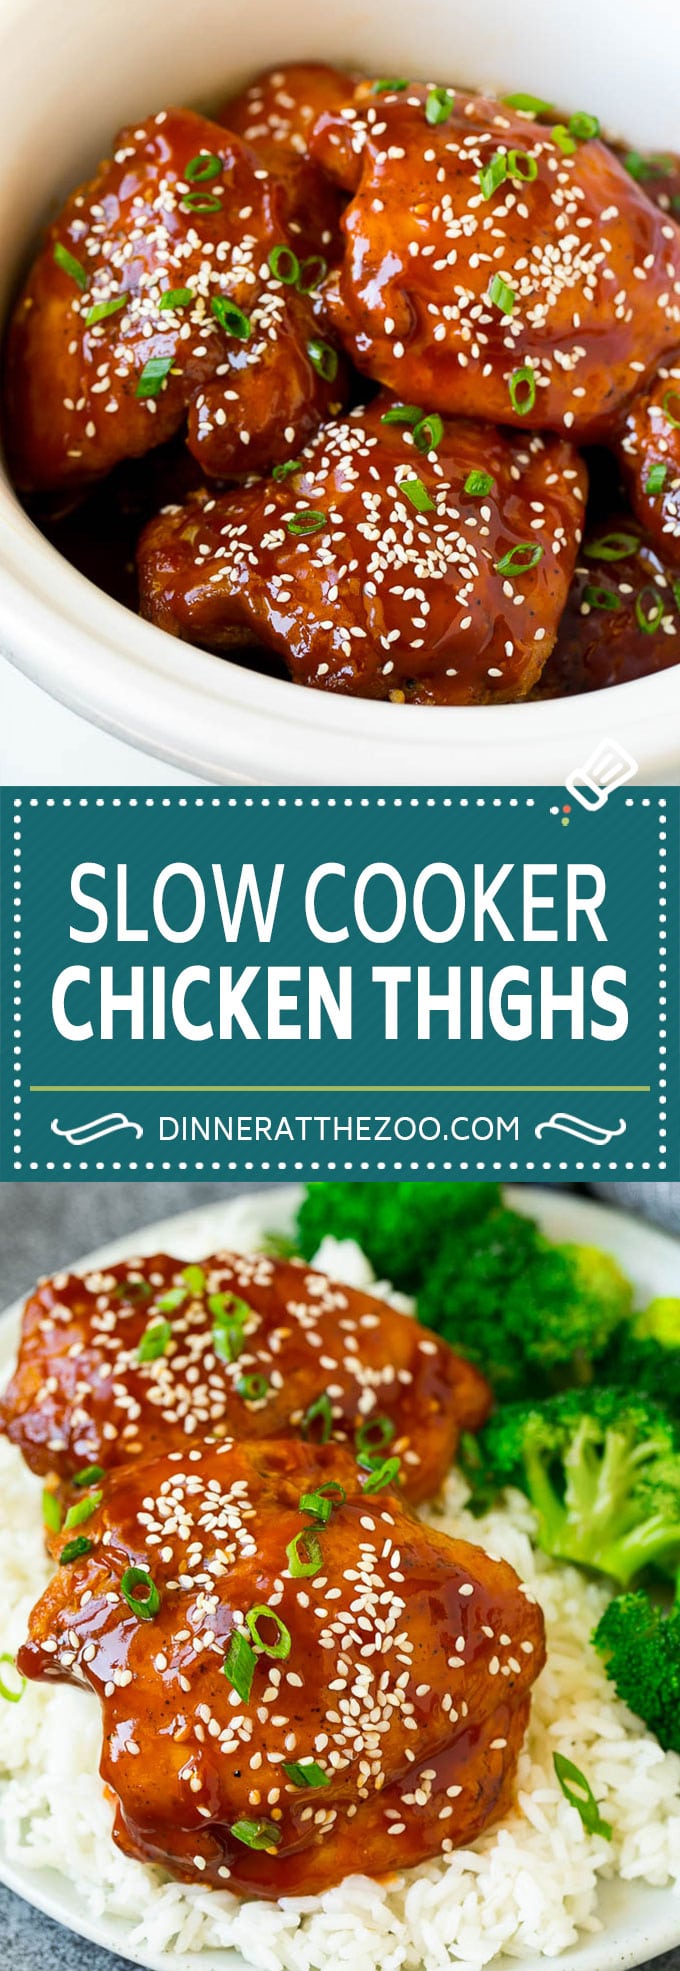 Slow Cooker Chicken Thighs | Crock Pot Chicken Thighs | Honey Garlic Chicken #chicken #slowcooker #crockpot #dinner #dinneratthezoo